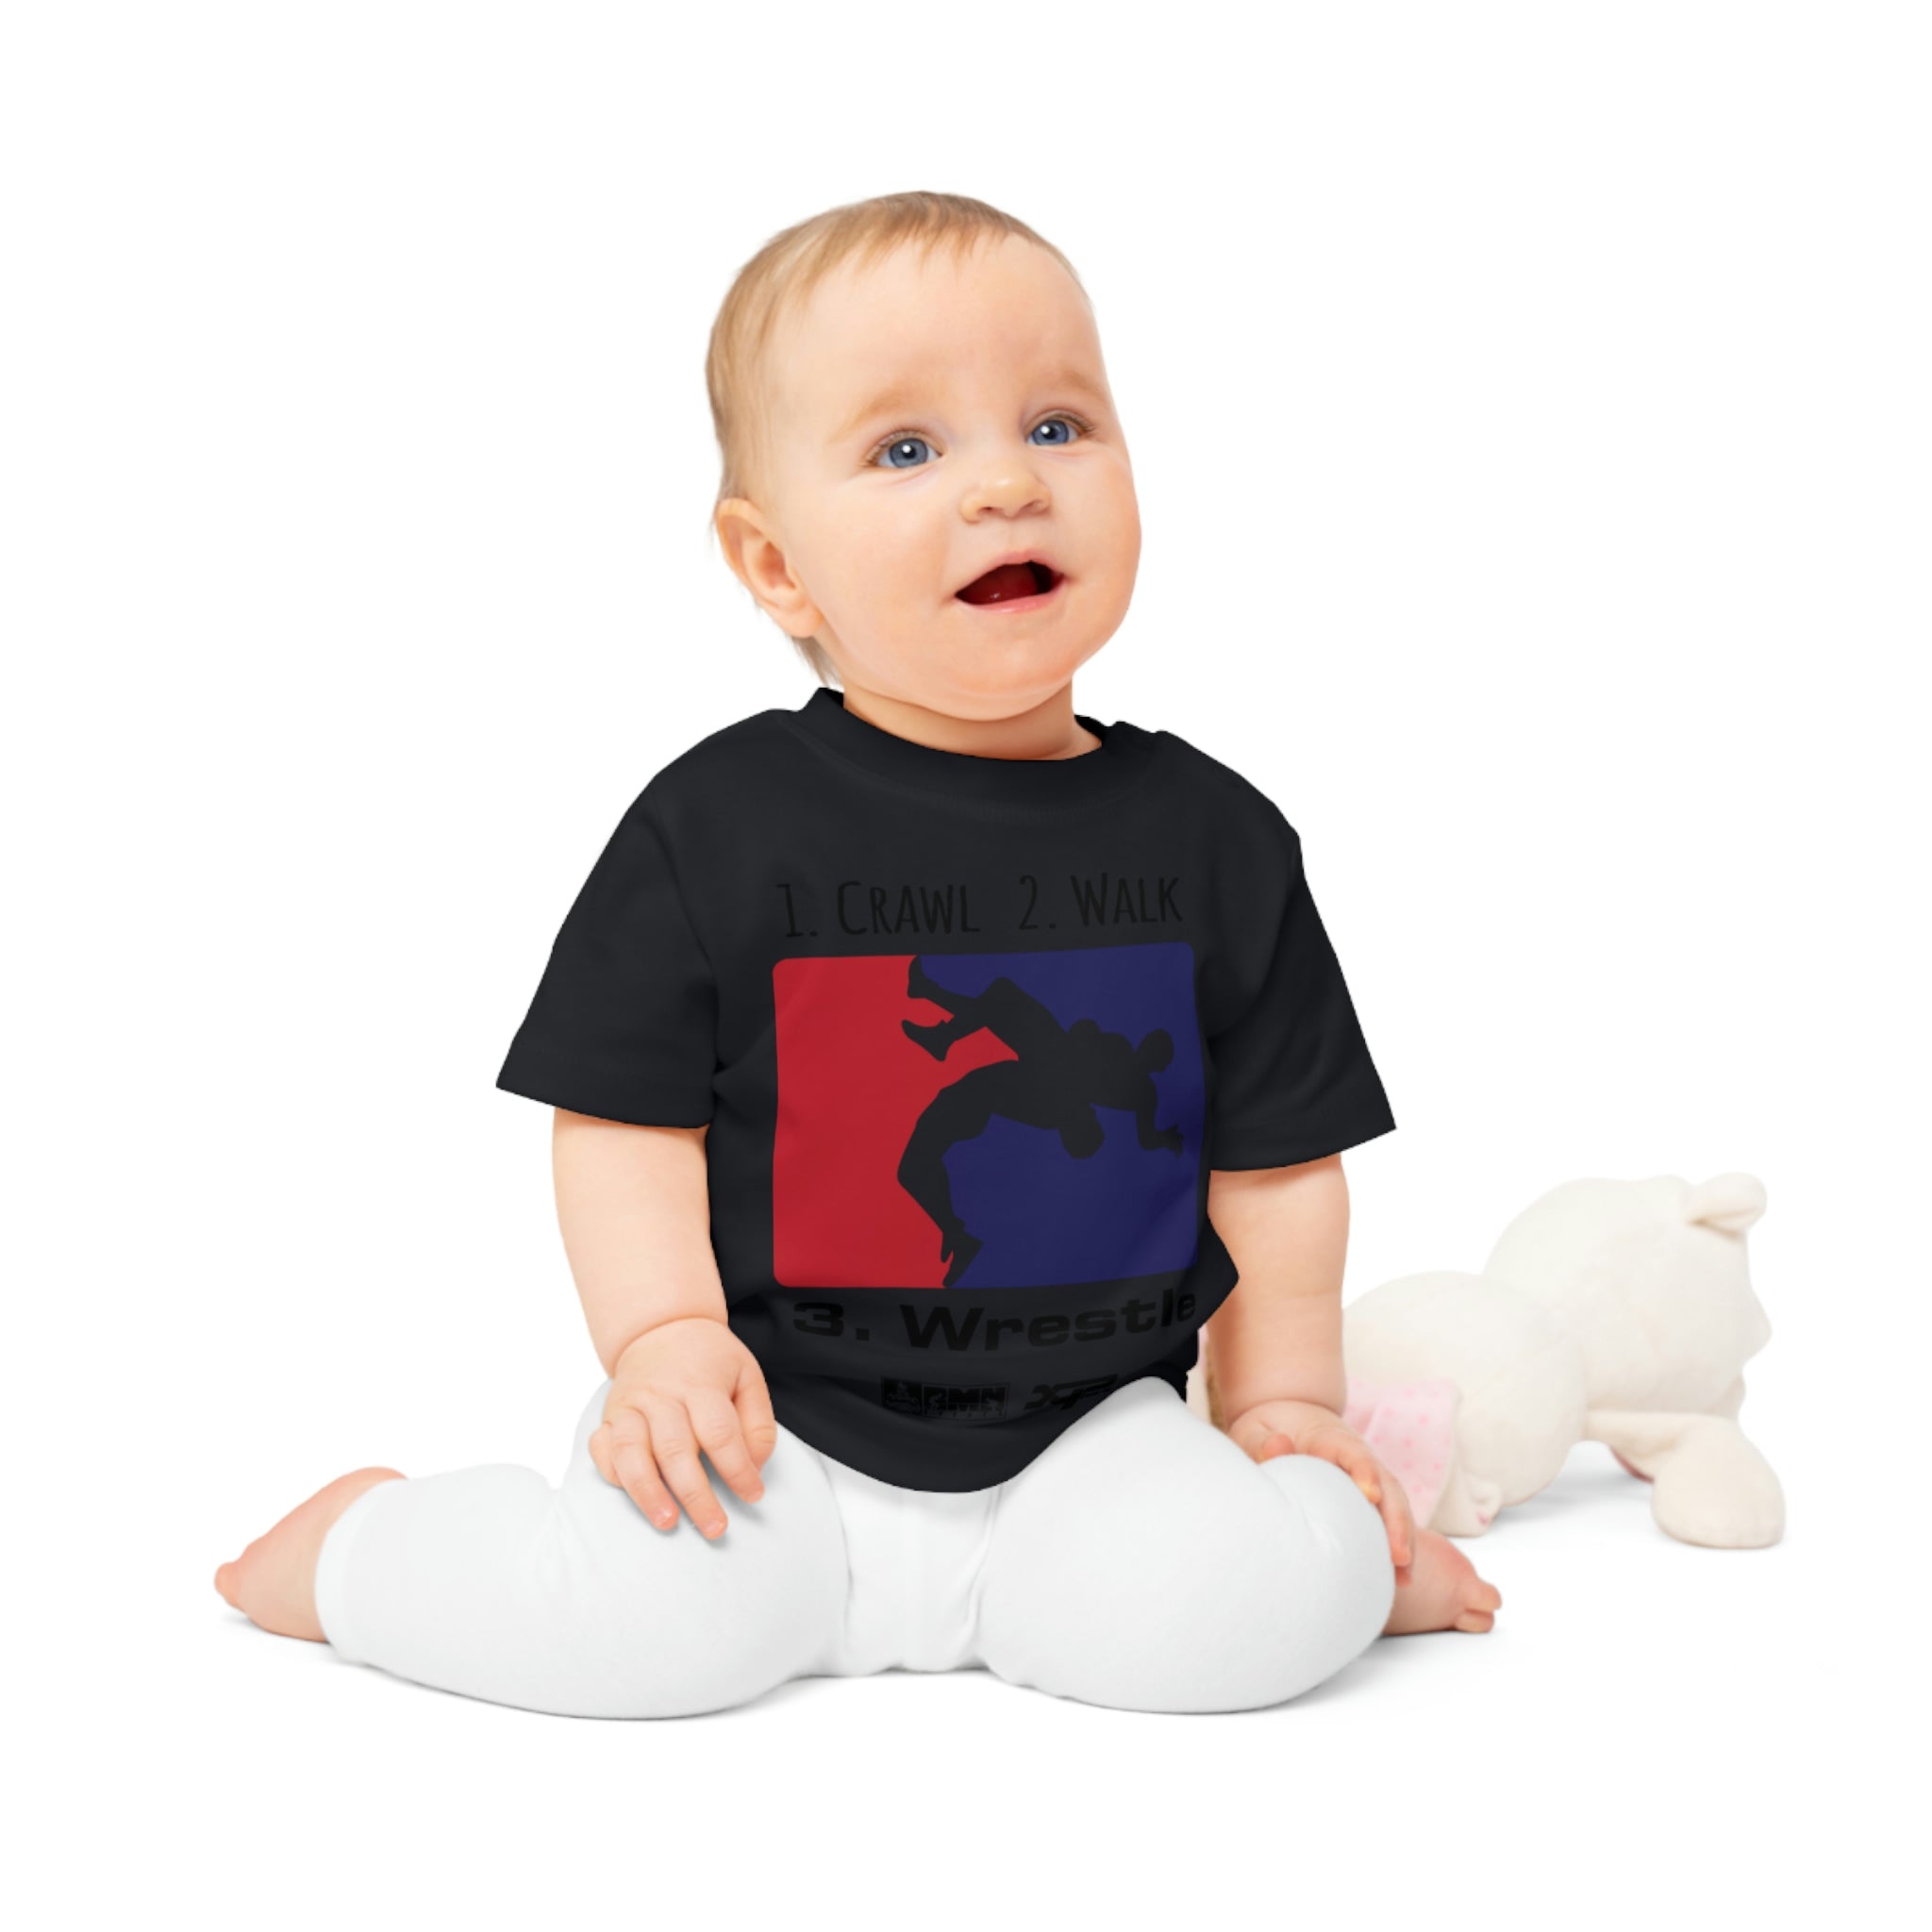 Crawl, Walk, Wrestle Baby T-Shirt by XPA Gear